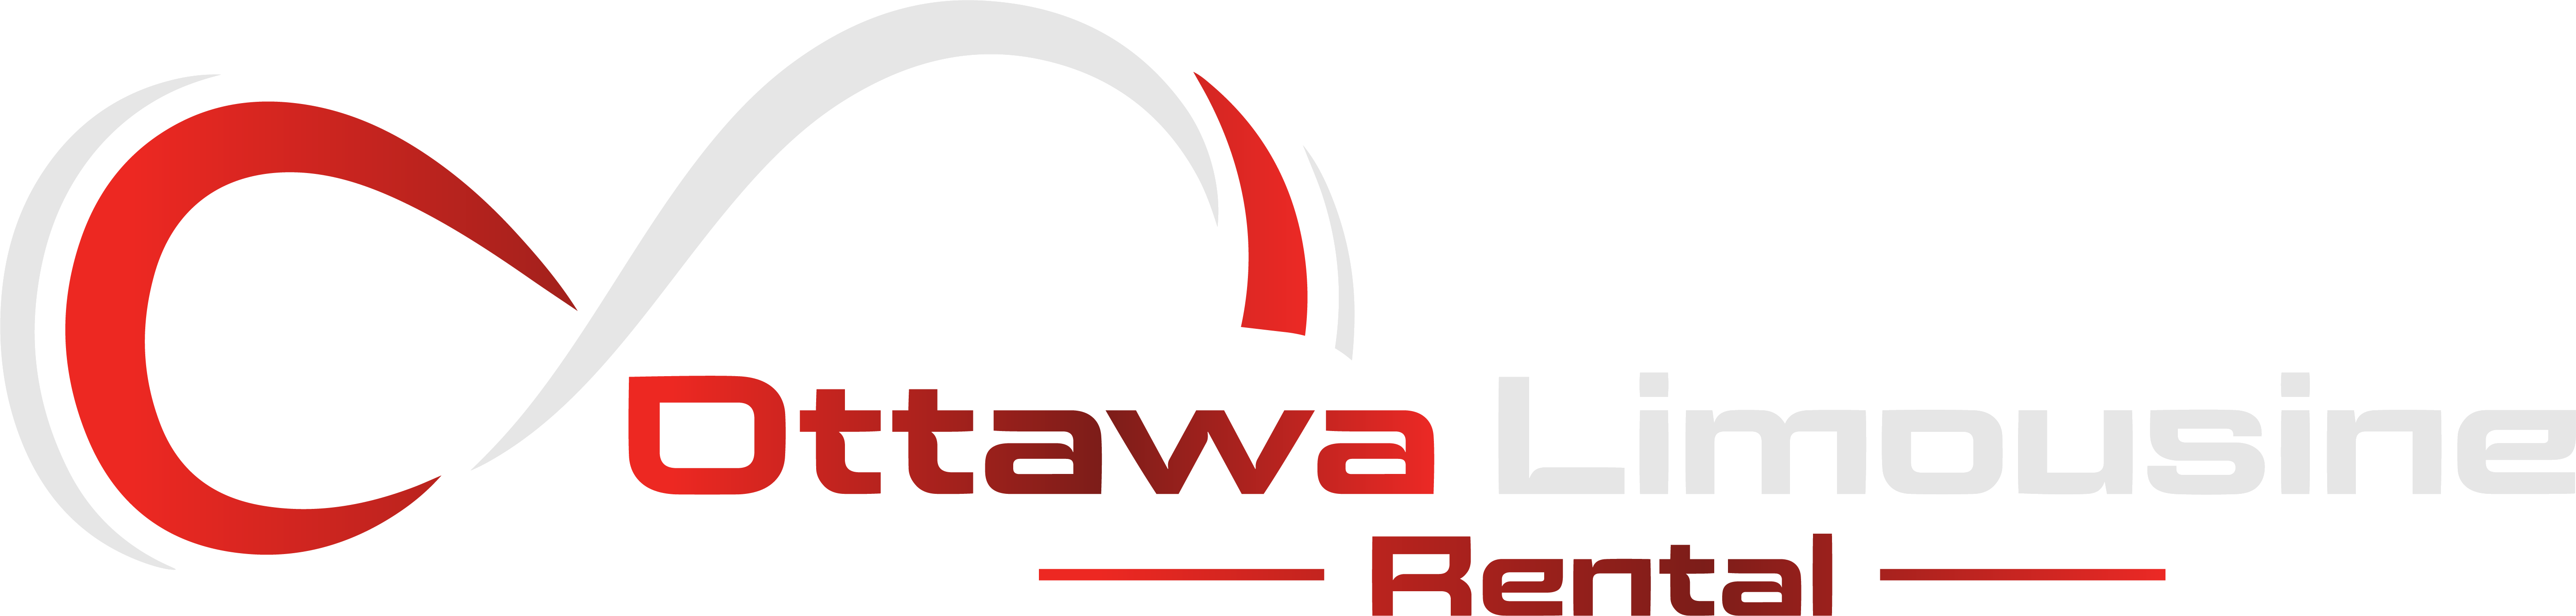 OTTAWA LIMOUSINE RENTAL logo